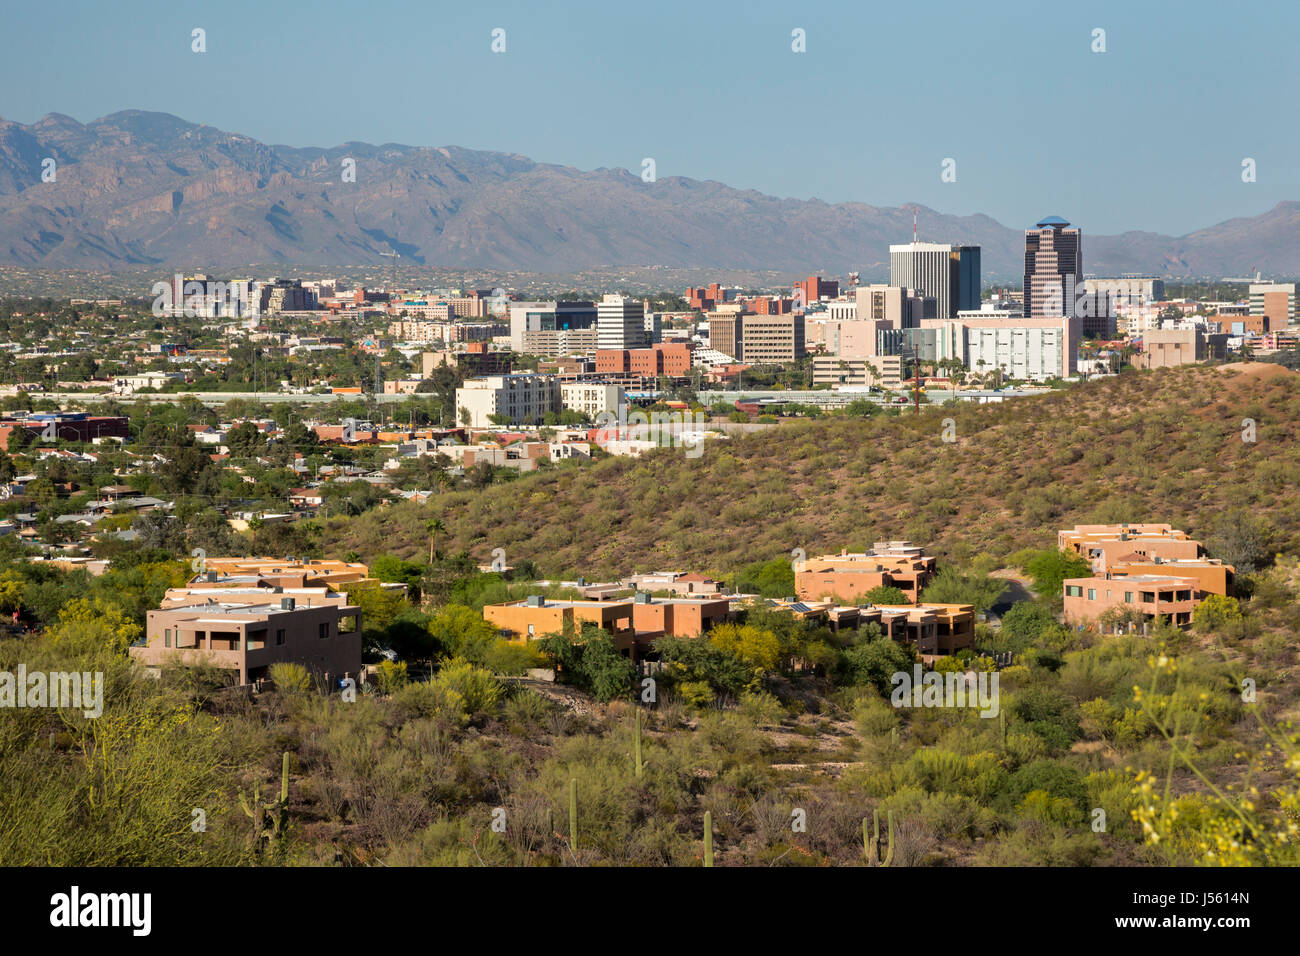 Tucson, Arizona, with the Santa Catalina Mountains in the background. Stock Photo